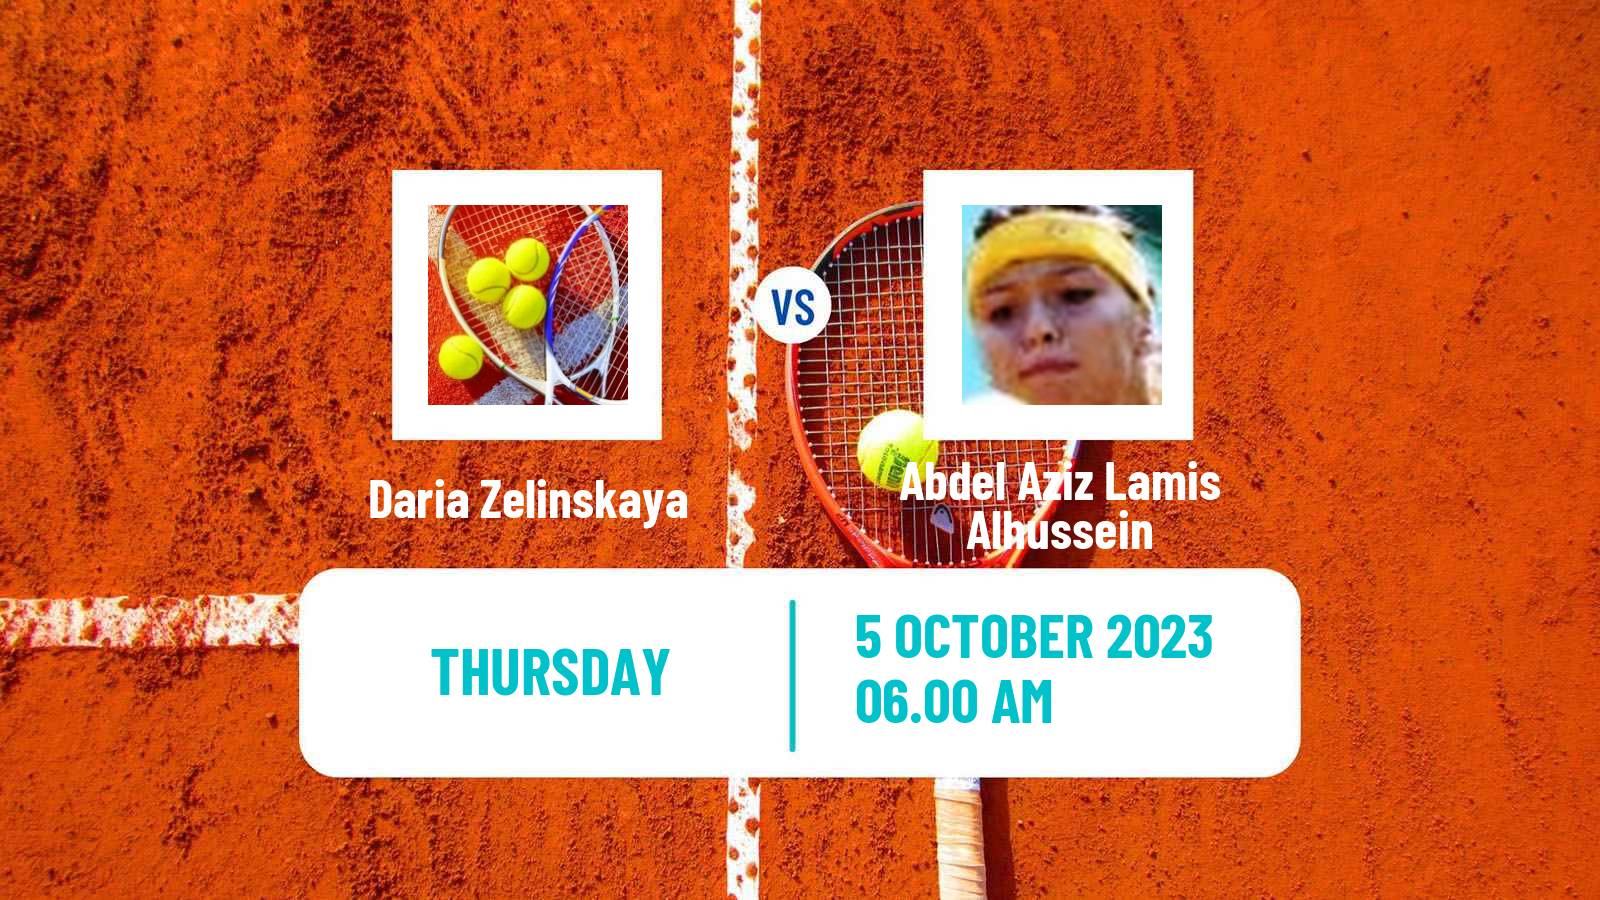 Tennis ITF W15 Sharm Elsheikh 13 Women Daria Zelinskaya - Abdel Aziz Lamis Alhussein